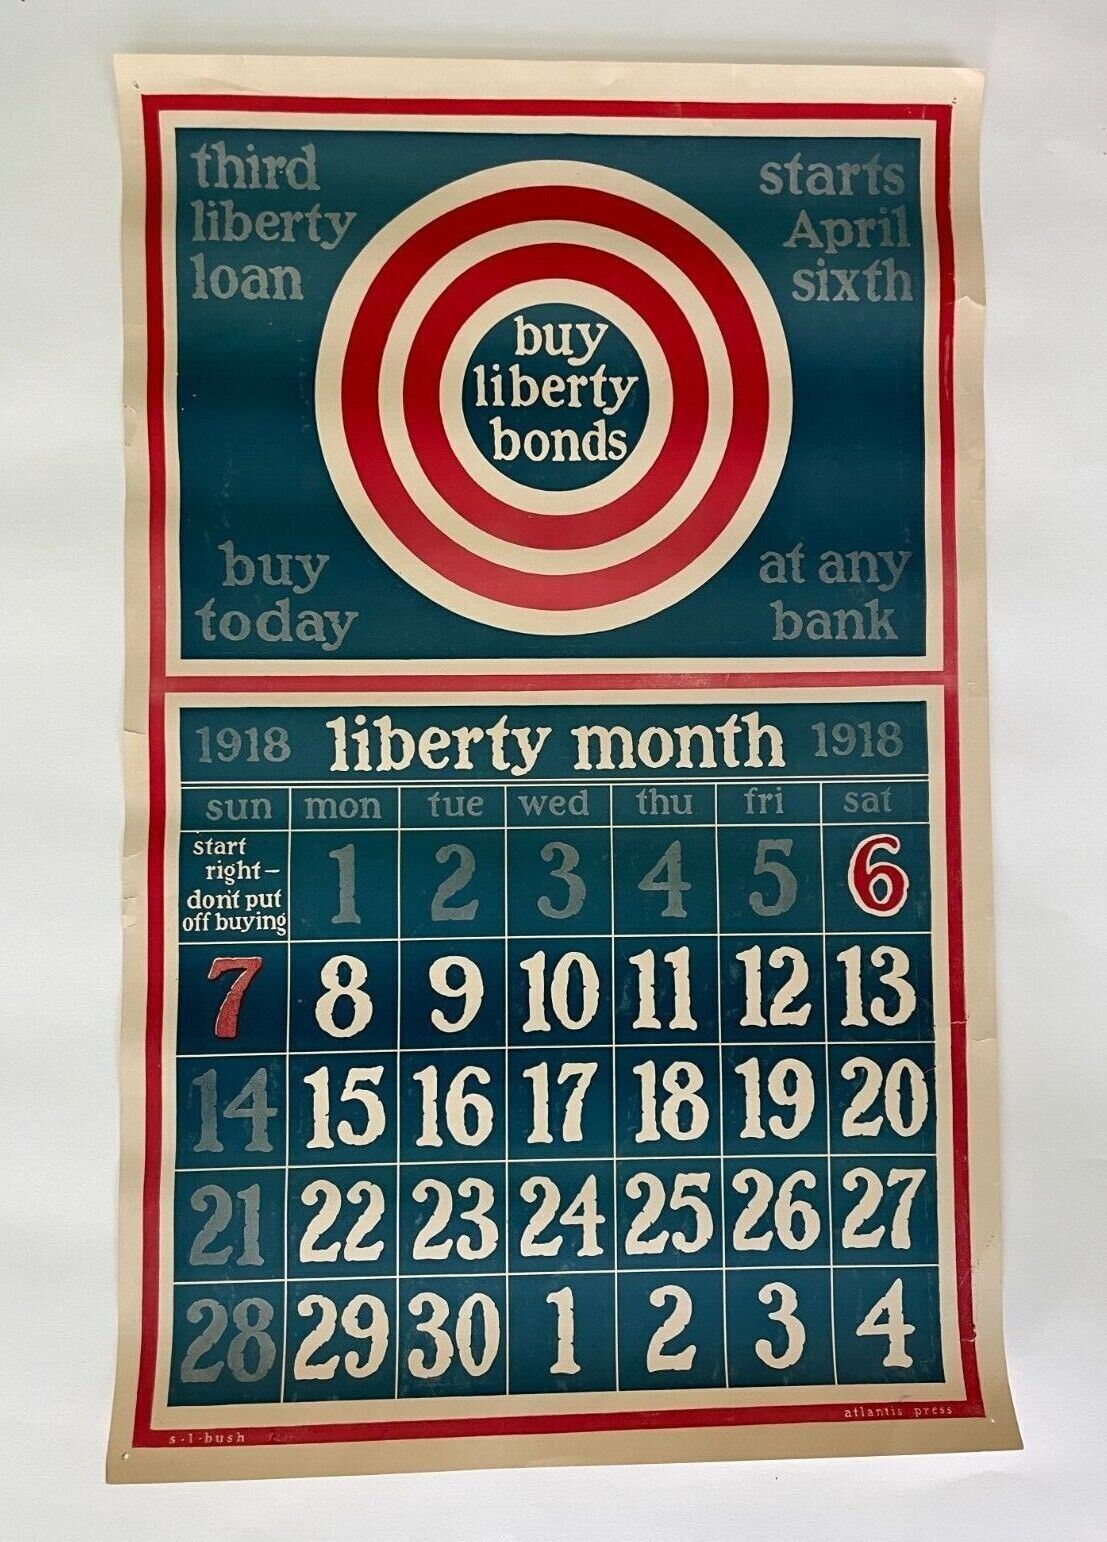 Original Vintage WWI Poster Buy Liberty Bonds Liberty Month 1918 Atlantis Press